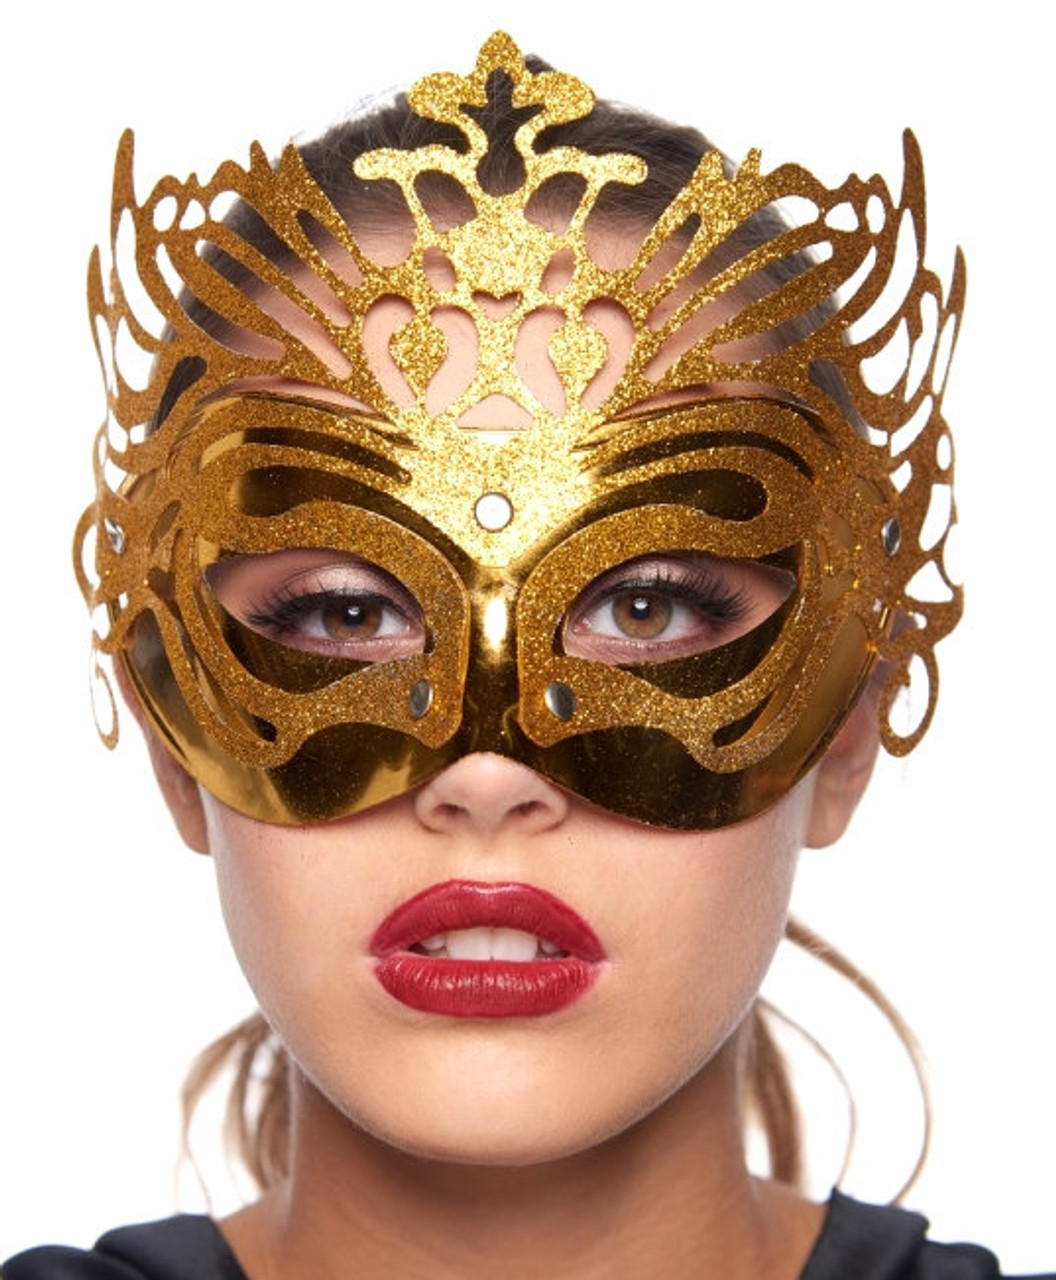 Déguisement de carnaval - trouver les meilleures options  Masquerade  outfit, Masquerade costumes, Masquerade attire